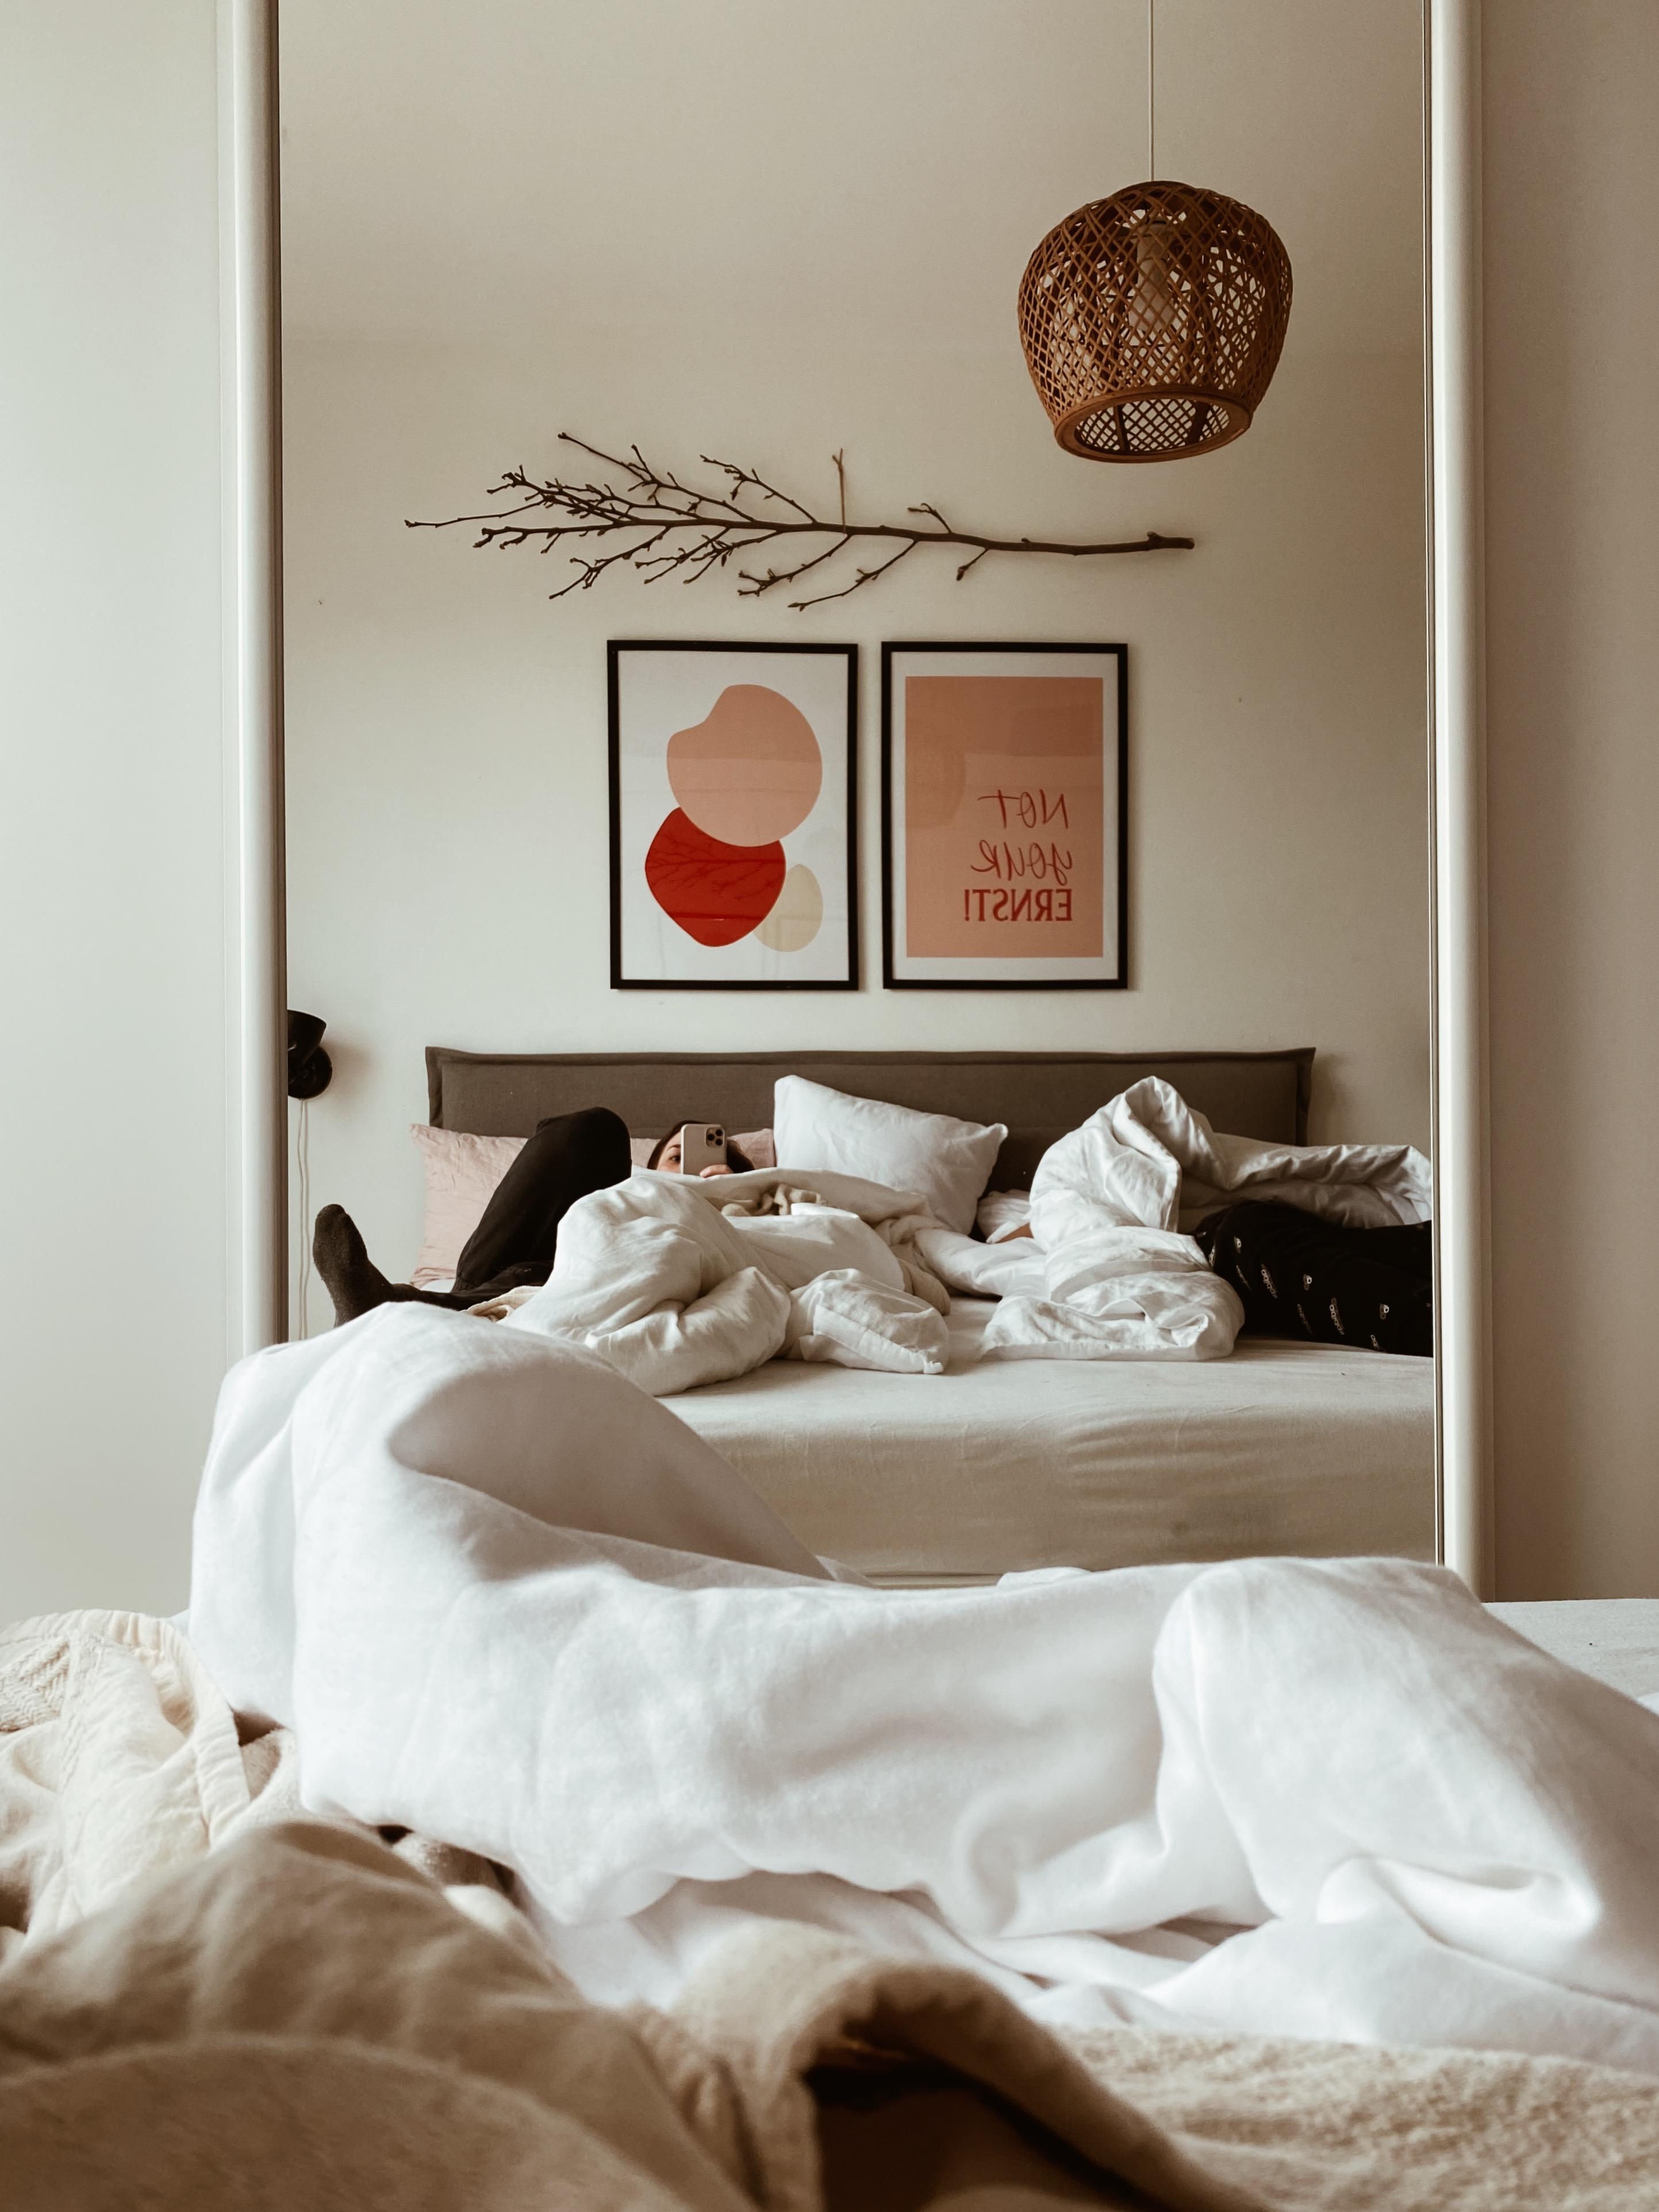 Große Bettliebe 🤍😍
#bedroom #schlafzimmer #bett #wanddeko #rattanlampe 